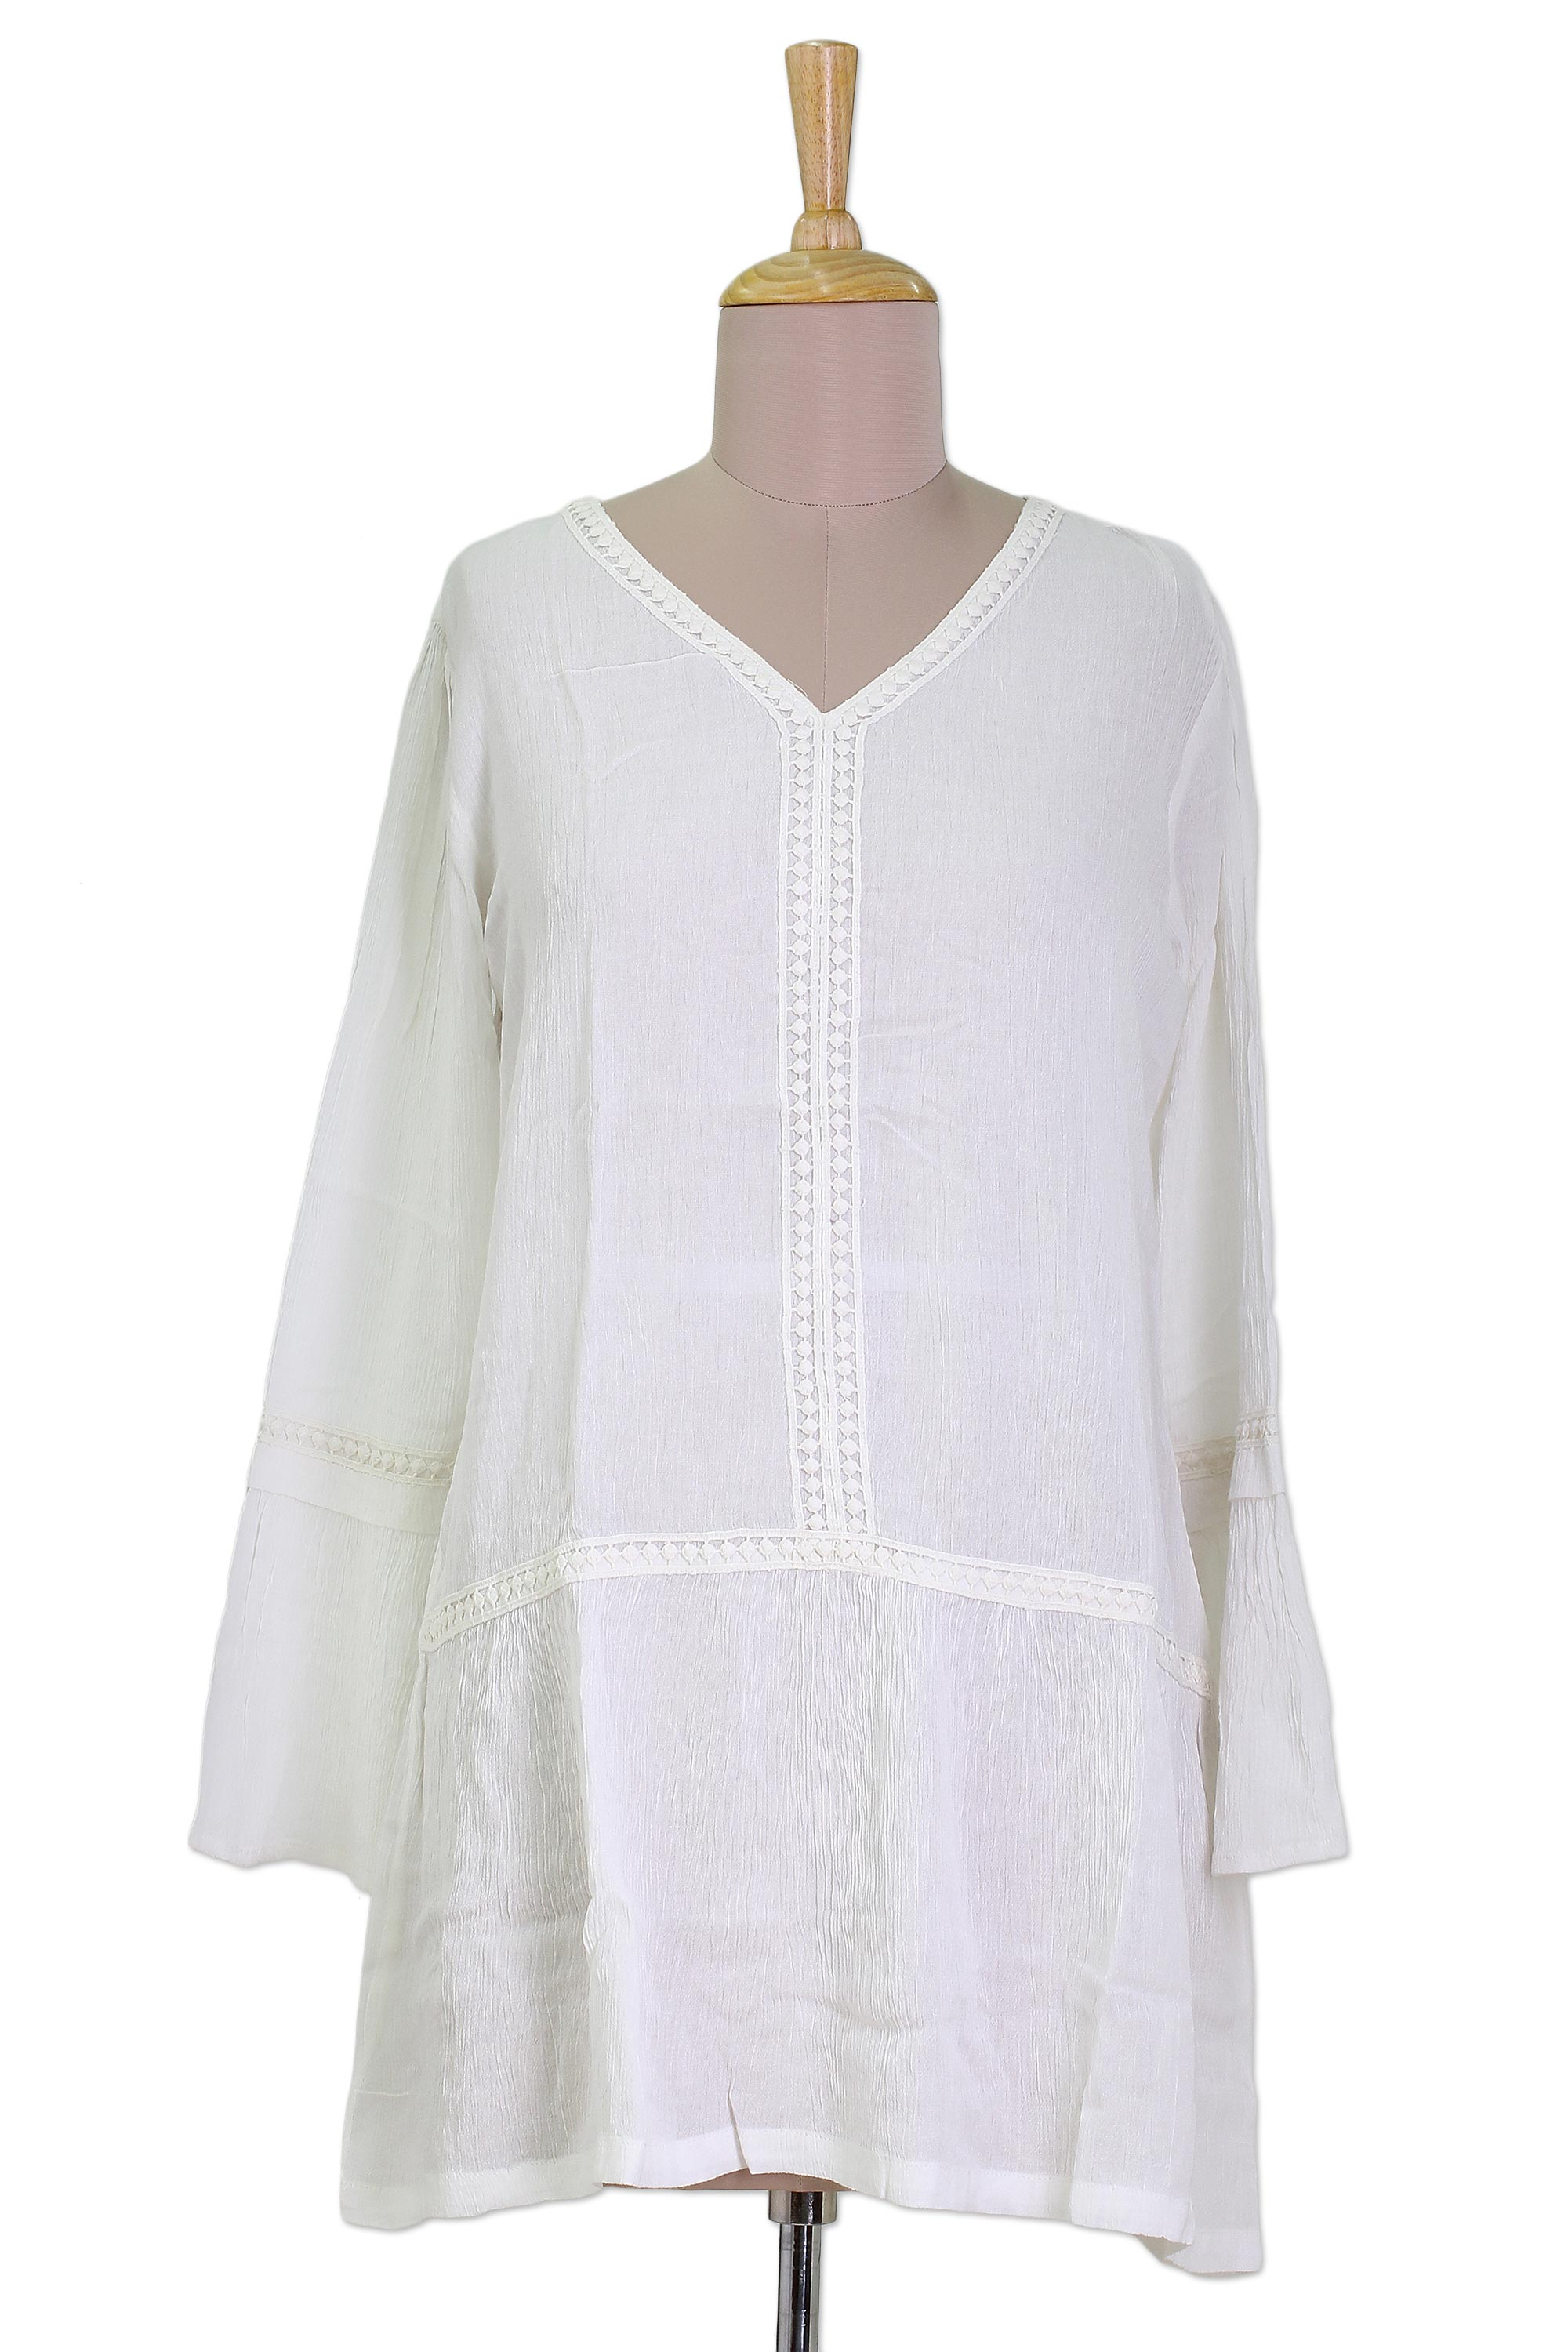 UNICEF Market | Long-Sleeved White 100% Viscose Tunic with Lace Trim ...